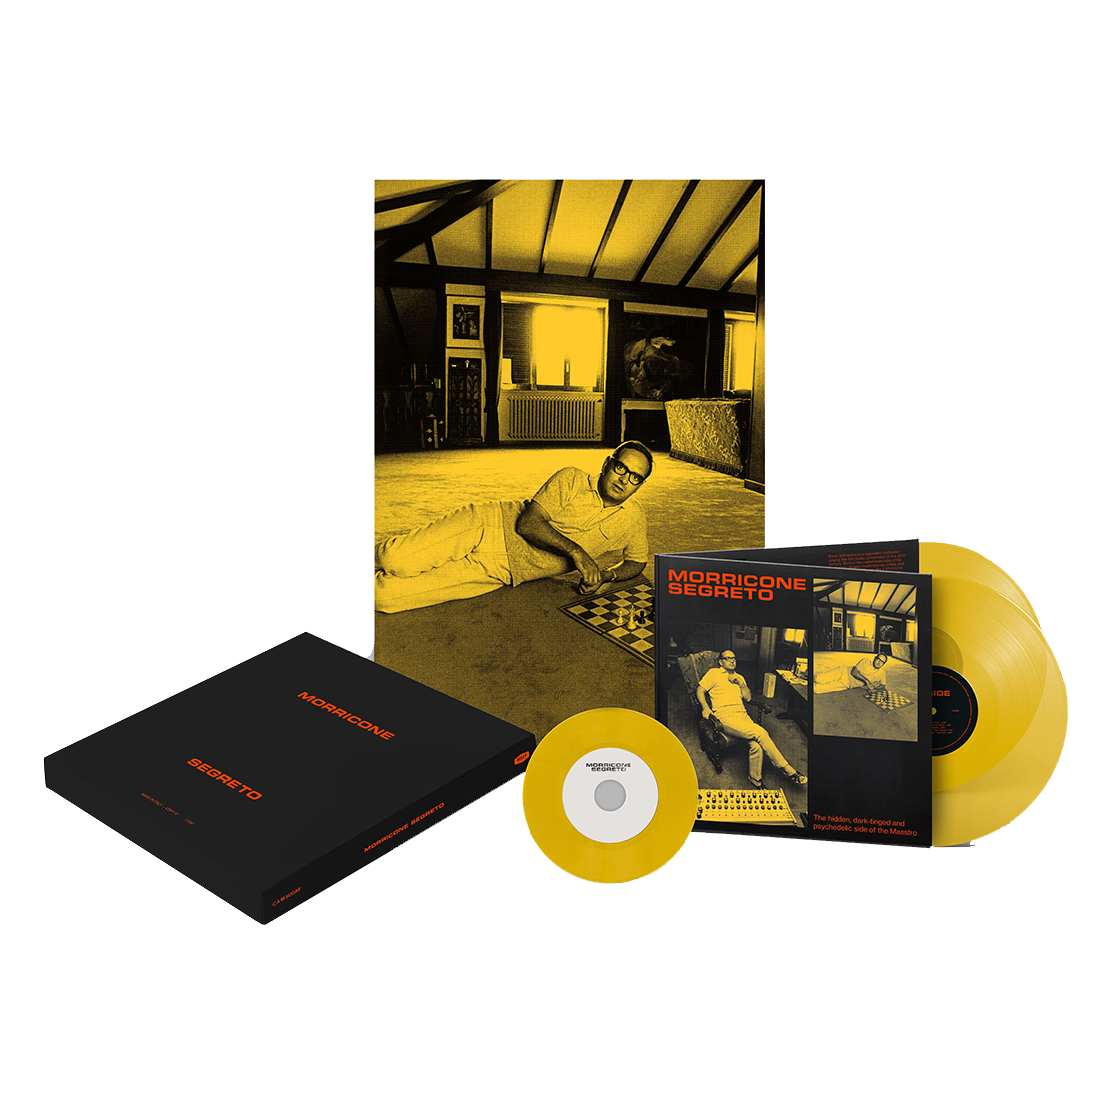 Ennio Morricone - Morricone Segreto: Yellow Vinyl LP + 7"